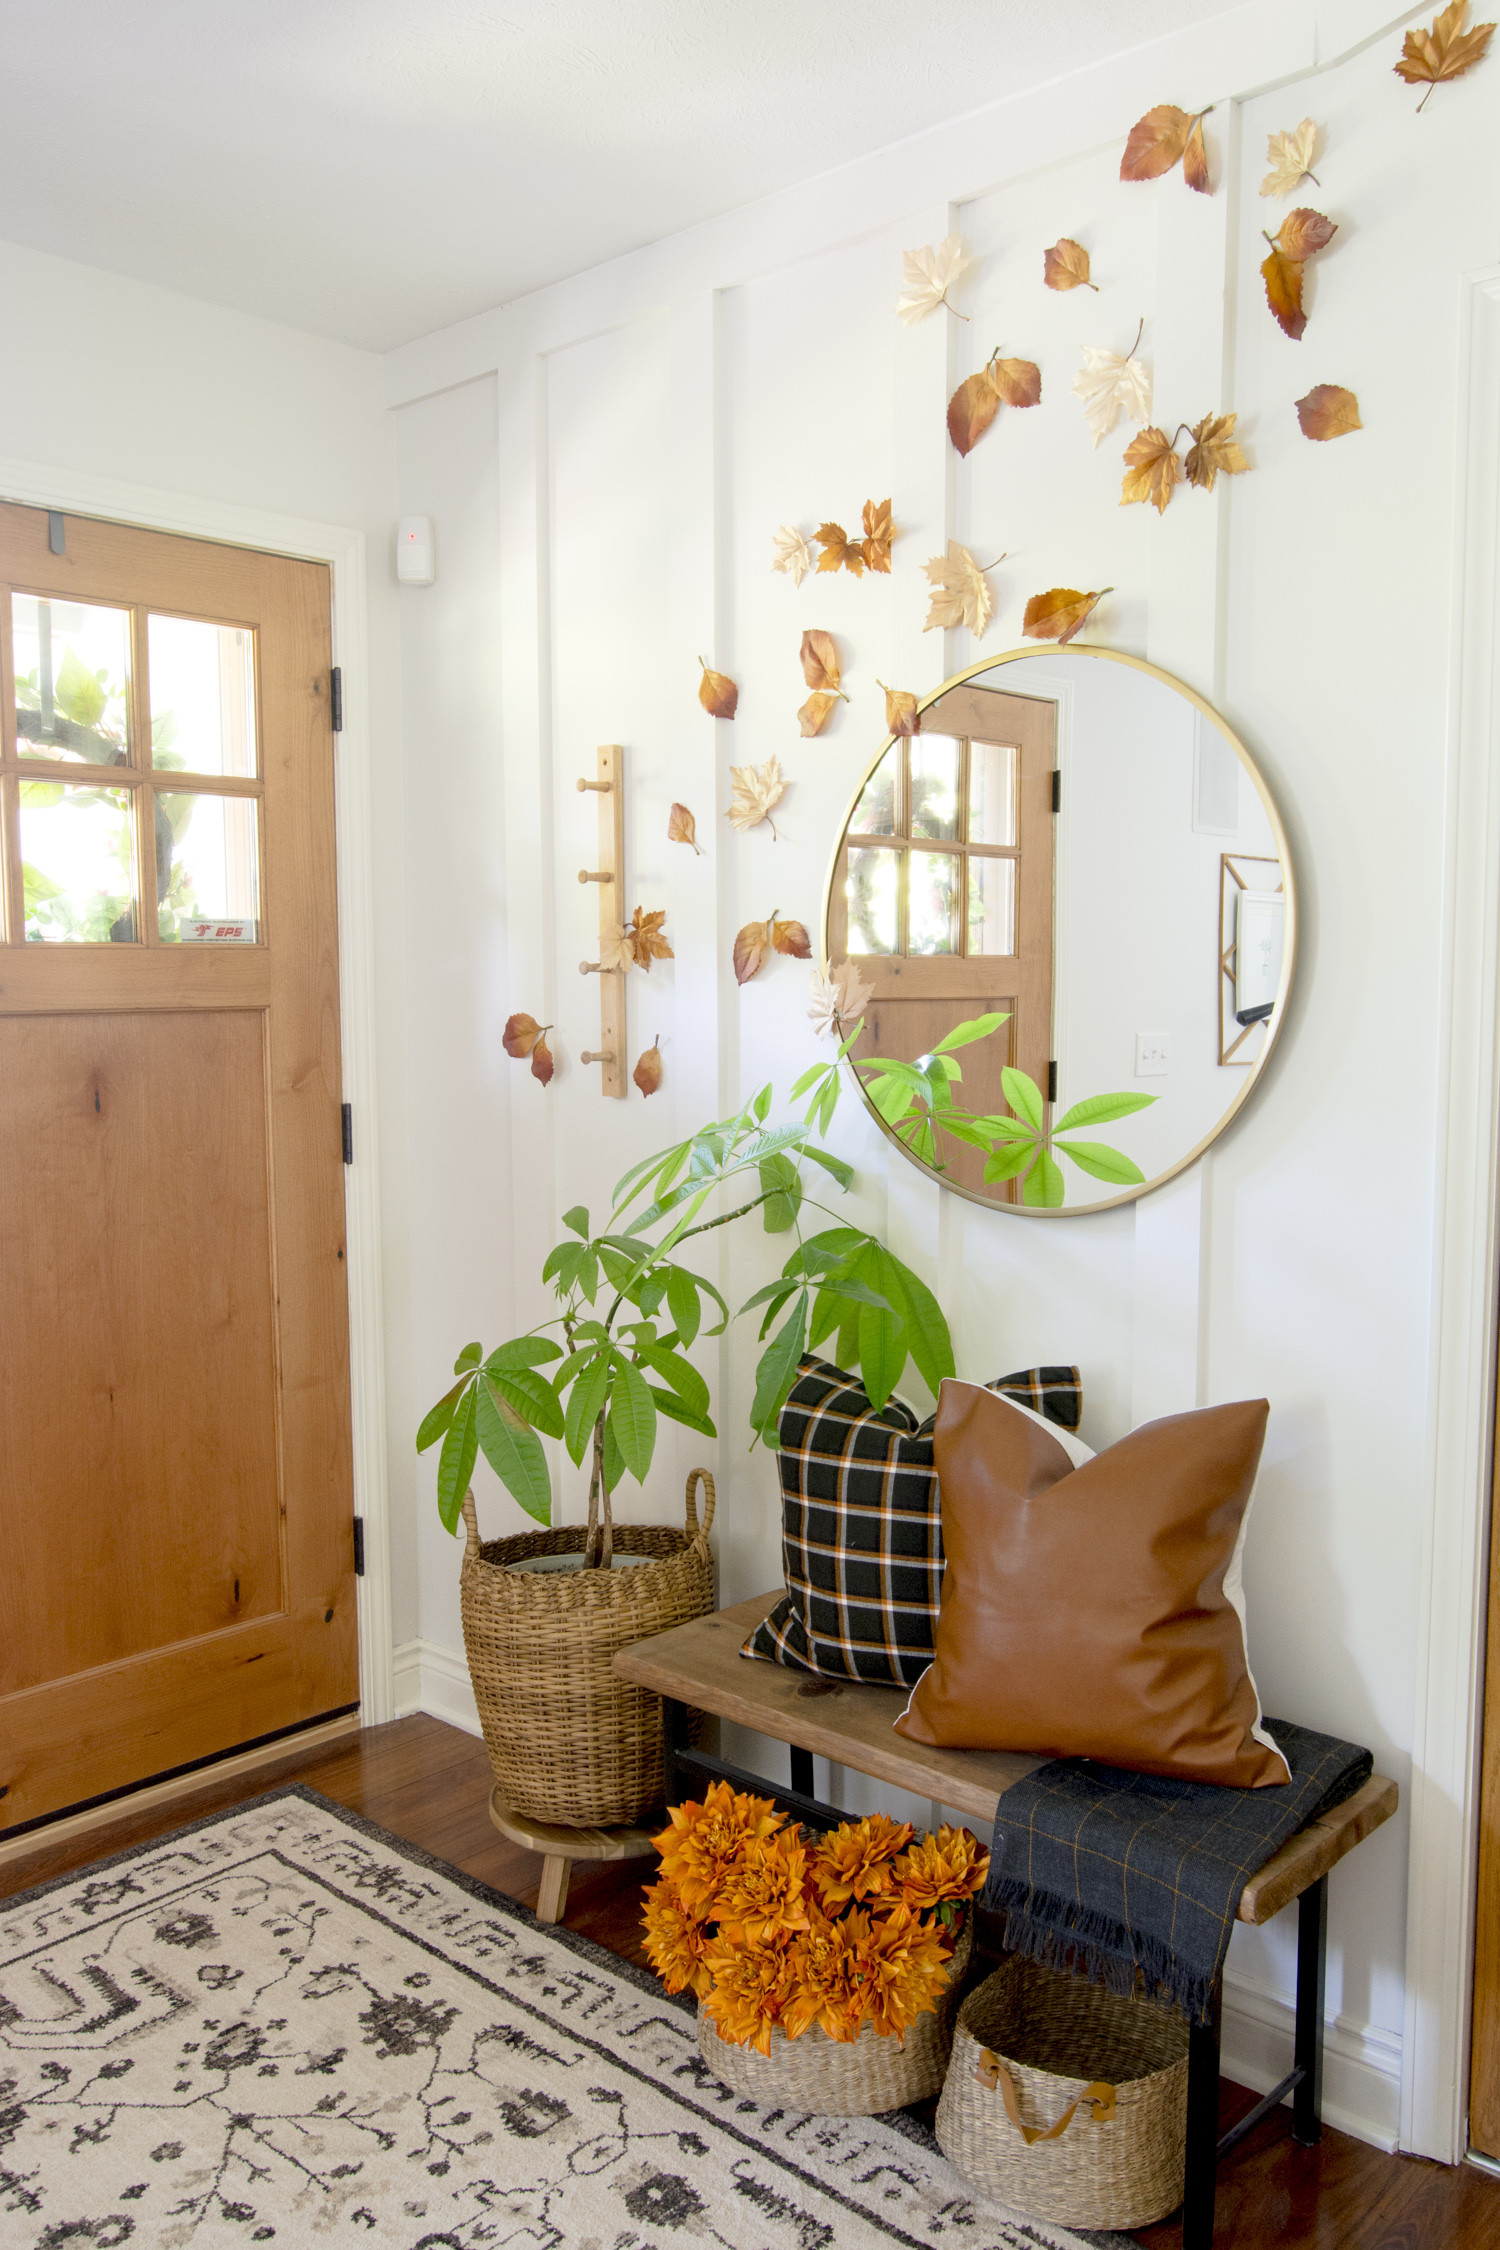 DIY Room Decor For Fall
 DIY Fall Decorations Simple Leaf Display